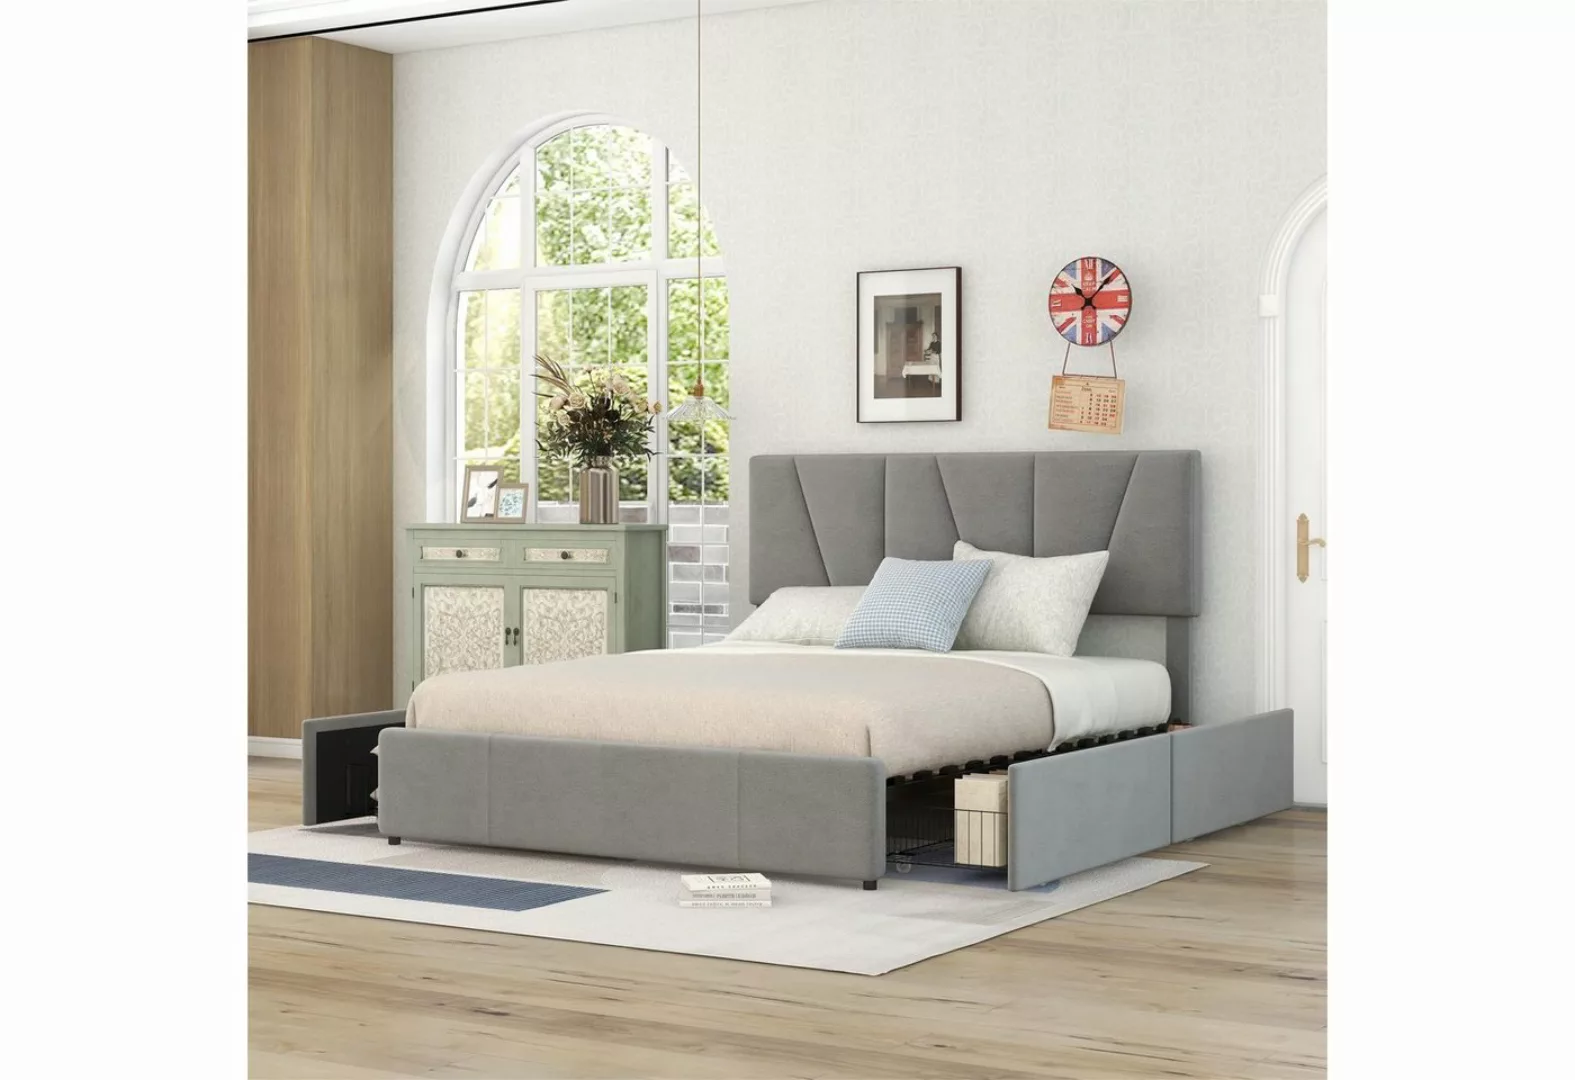 WISHDOR Polsterbett Doppelbett Stauraumbett Bett mit Lattenrost (160*200cm) günstig online kaufen